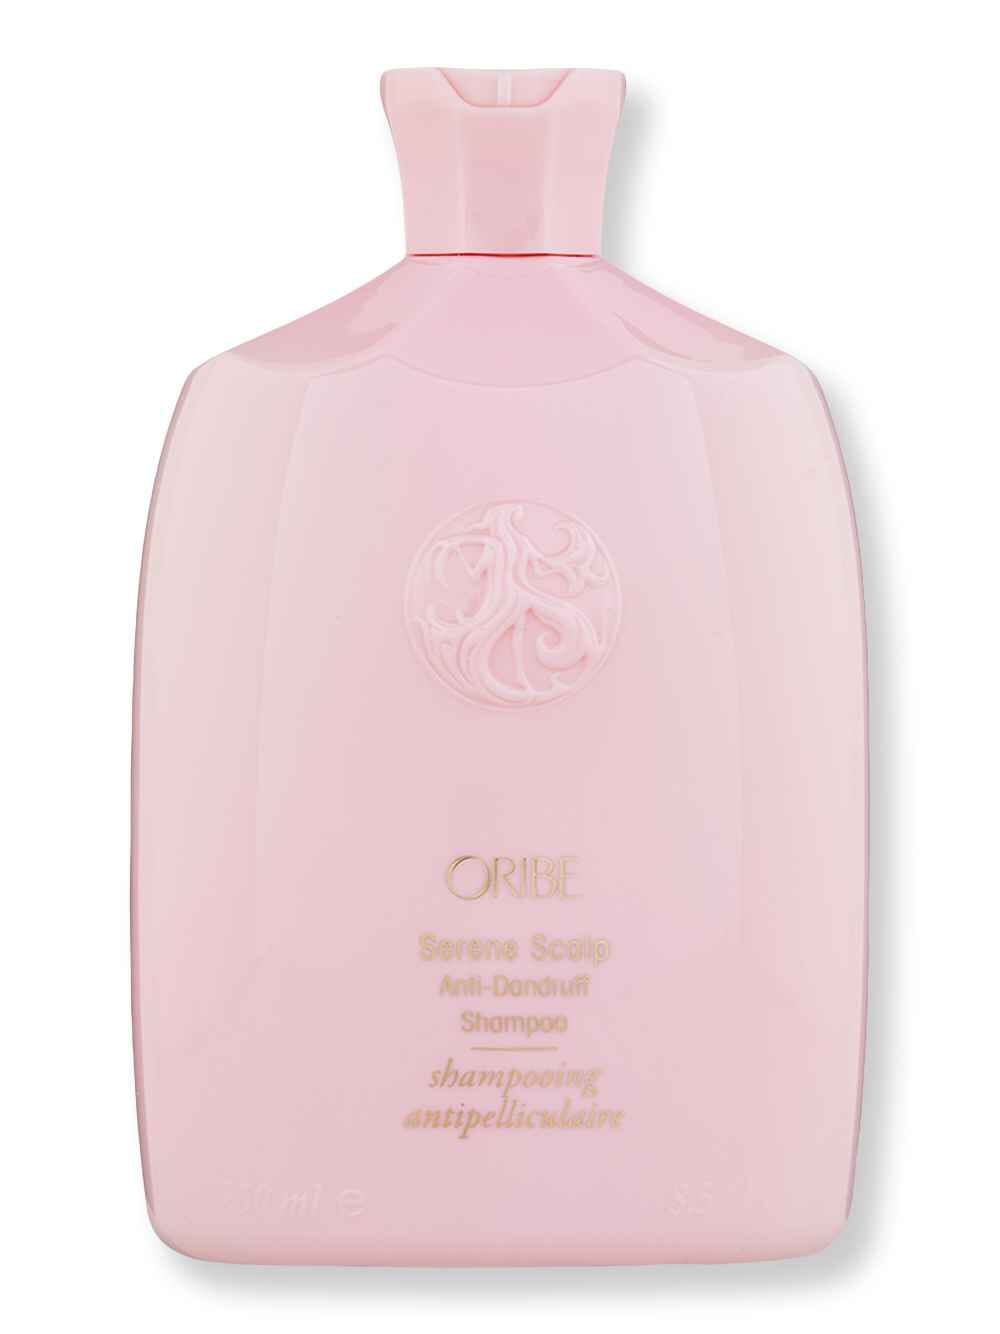 Oribe Oribe Serene Scalp Anti-Dandruff Shampoo 8.5 oz250 ml Shampoos 